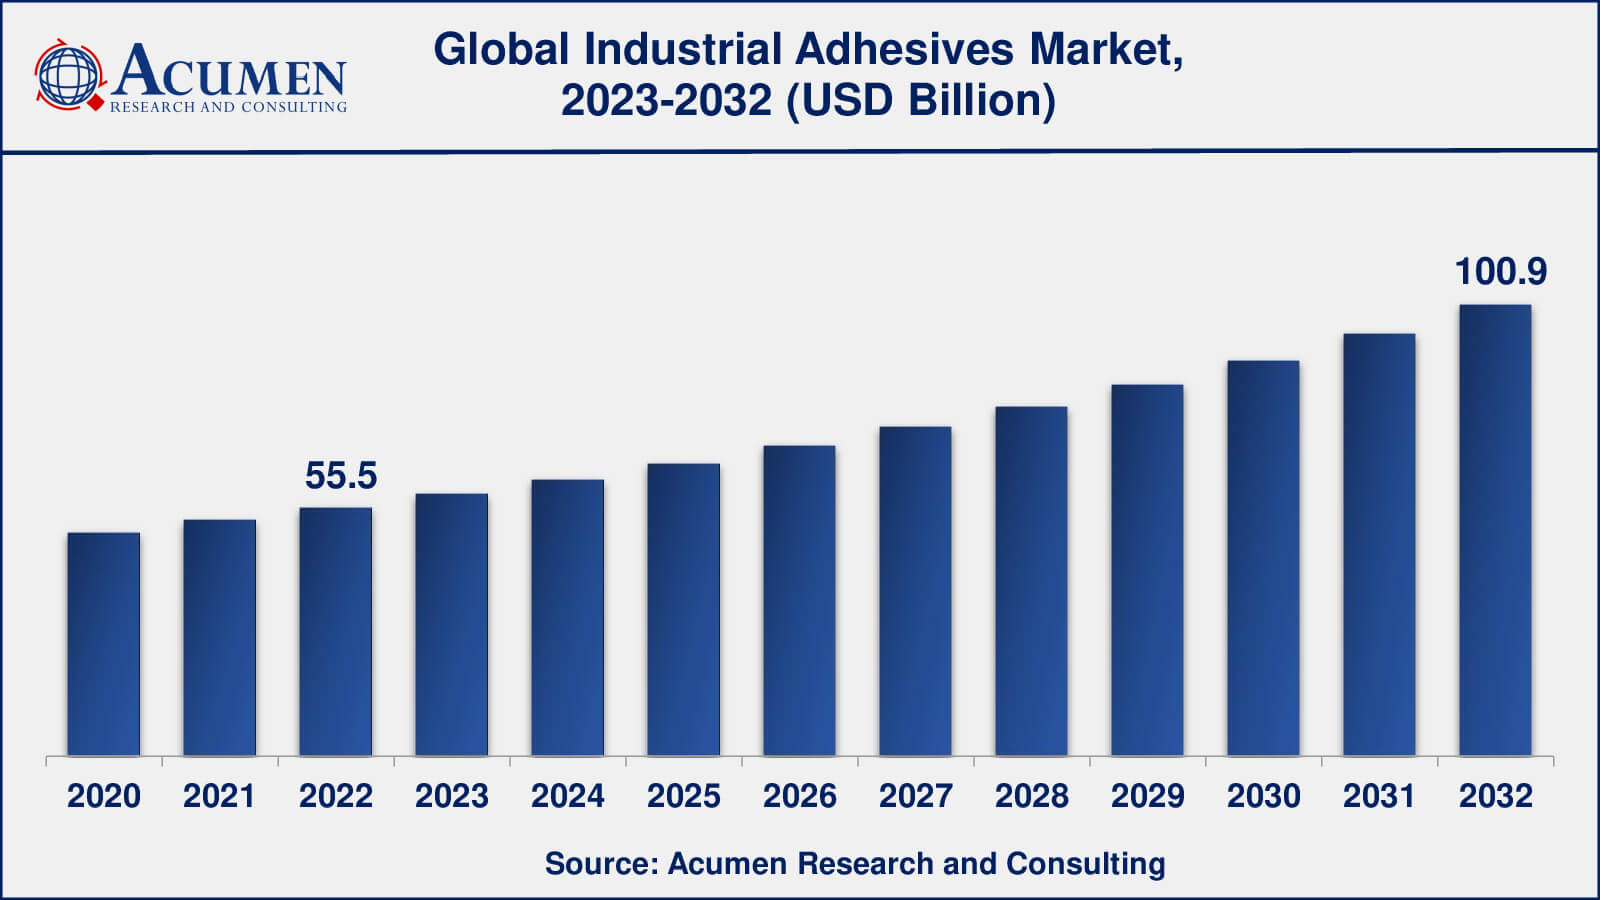 Global Industrial Adhesives Market Dynamics